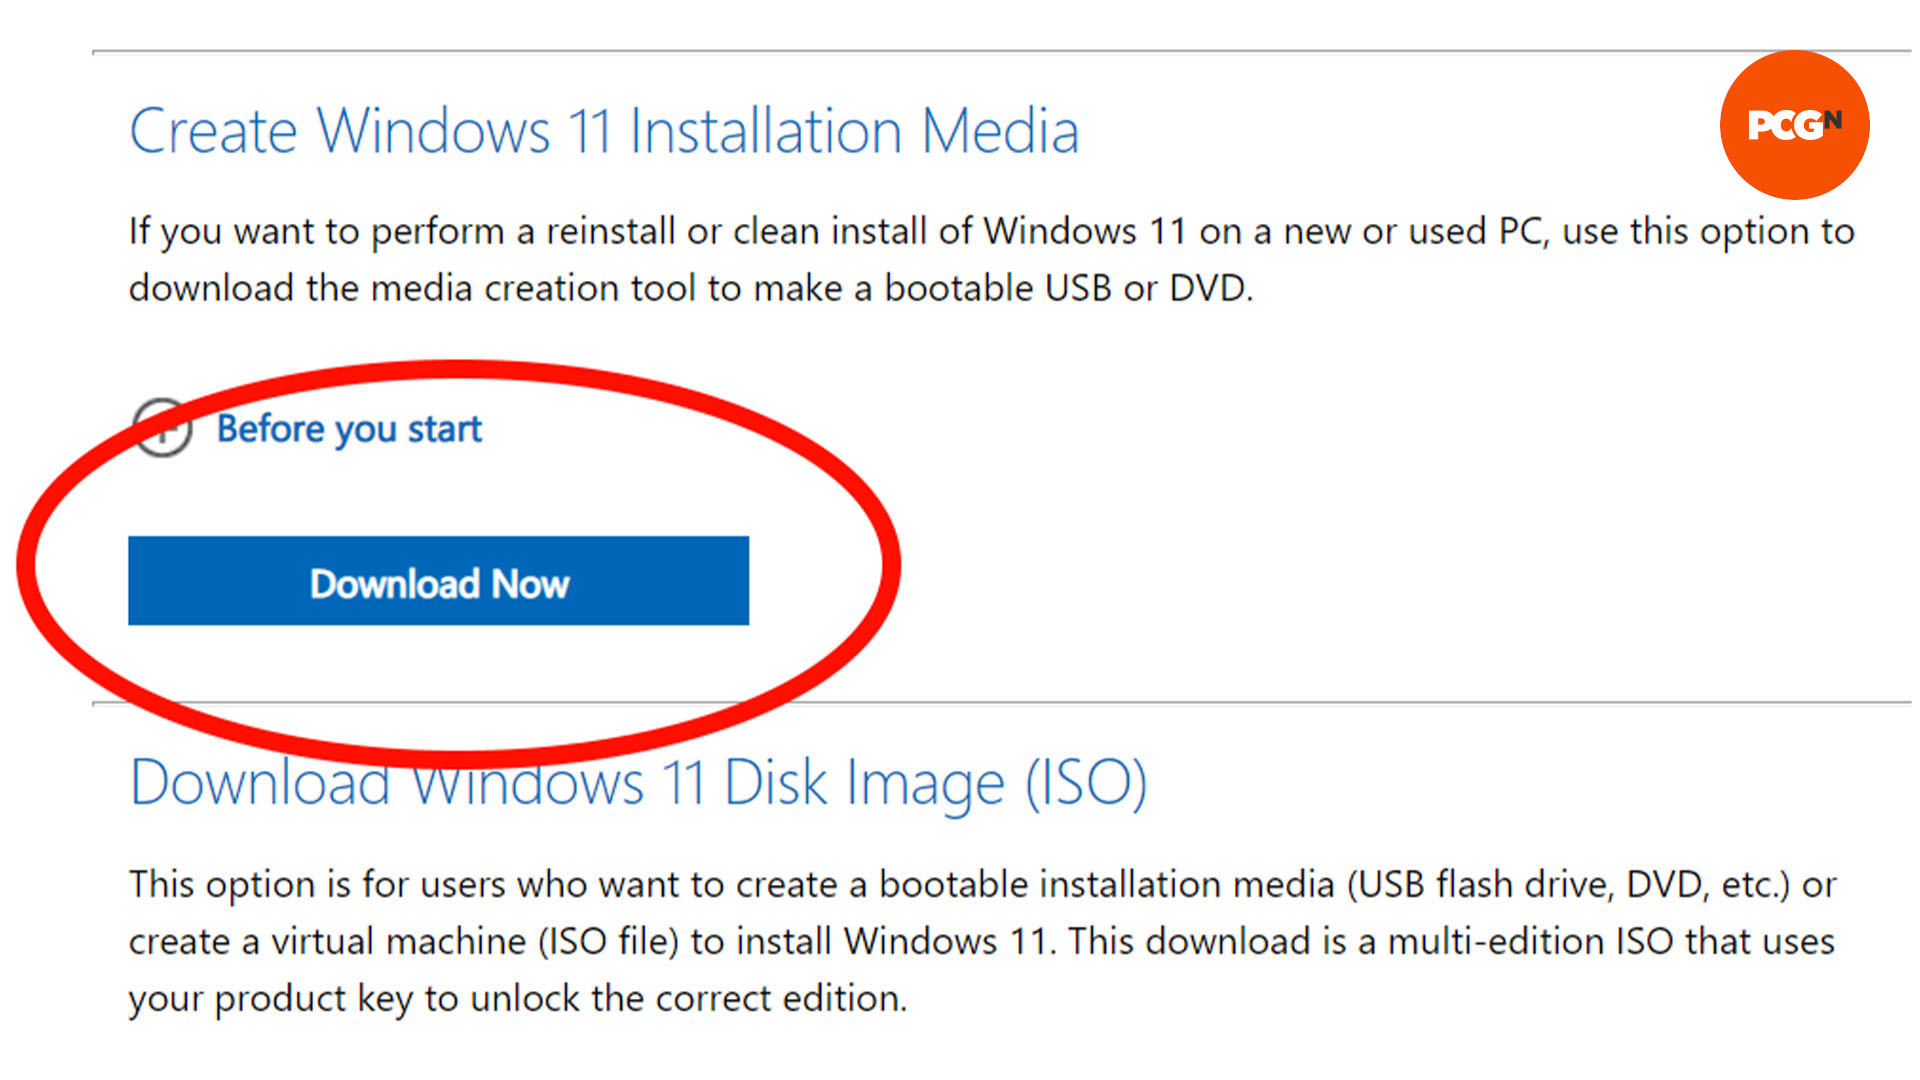 The Windows 11 media creation tool website